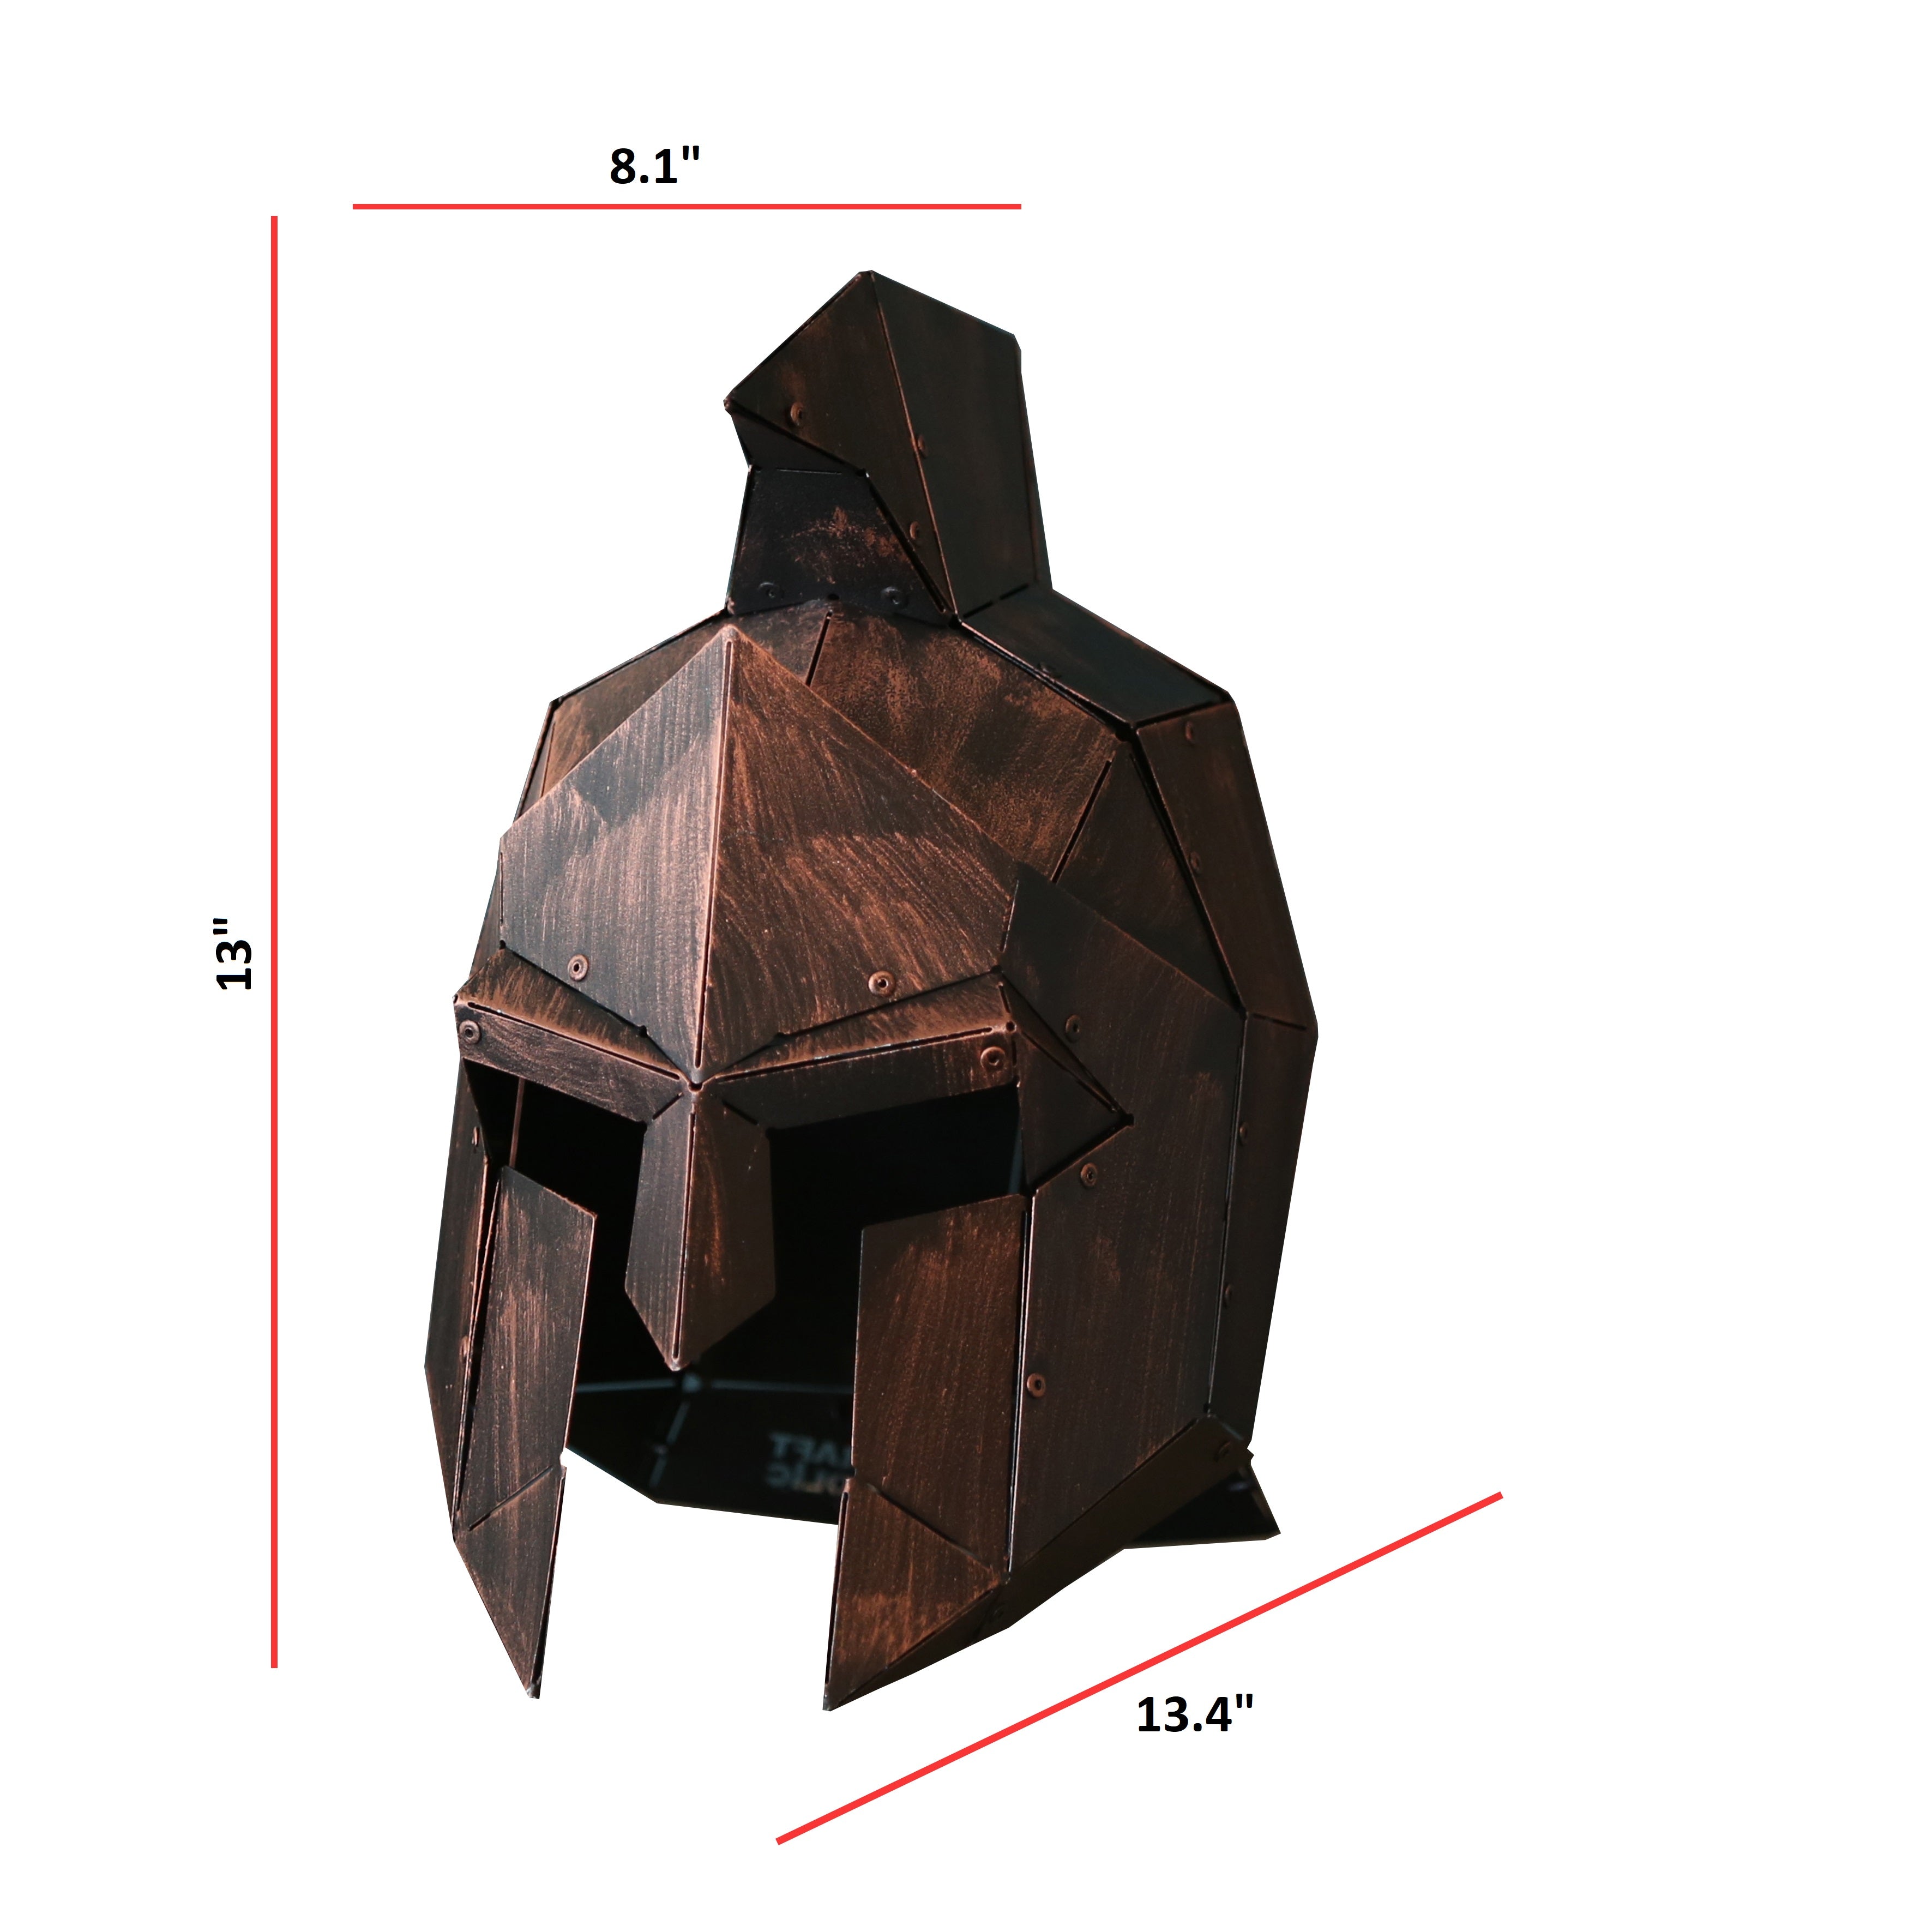 3D Geometric Art of Spartan Helmet